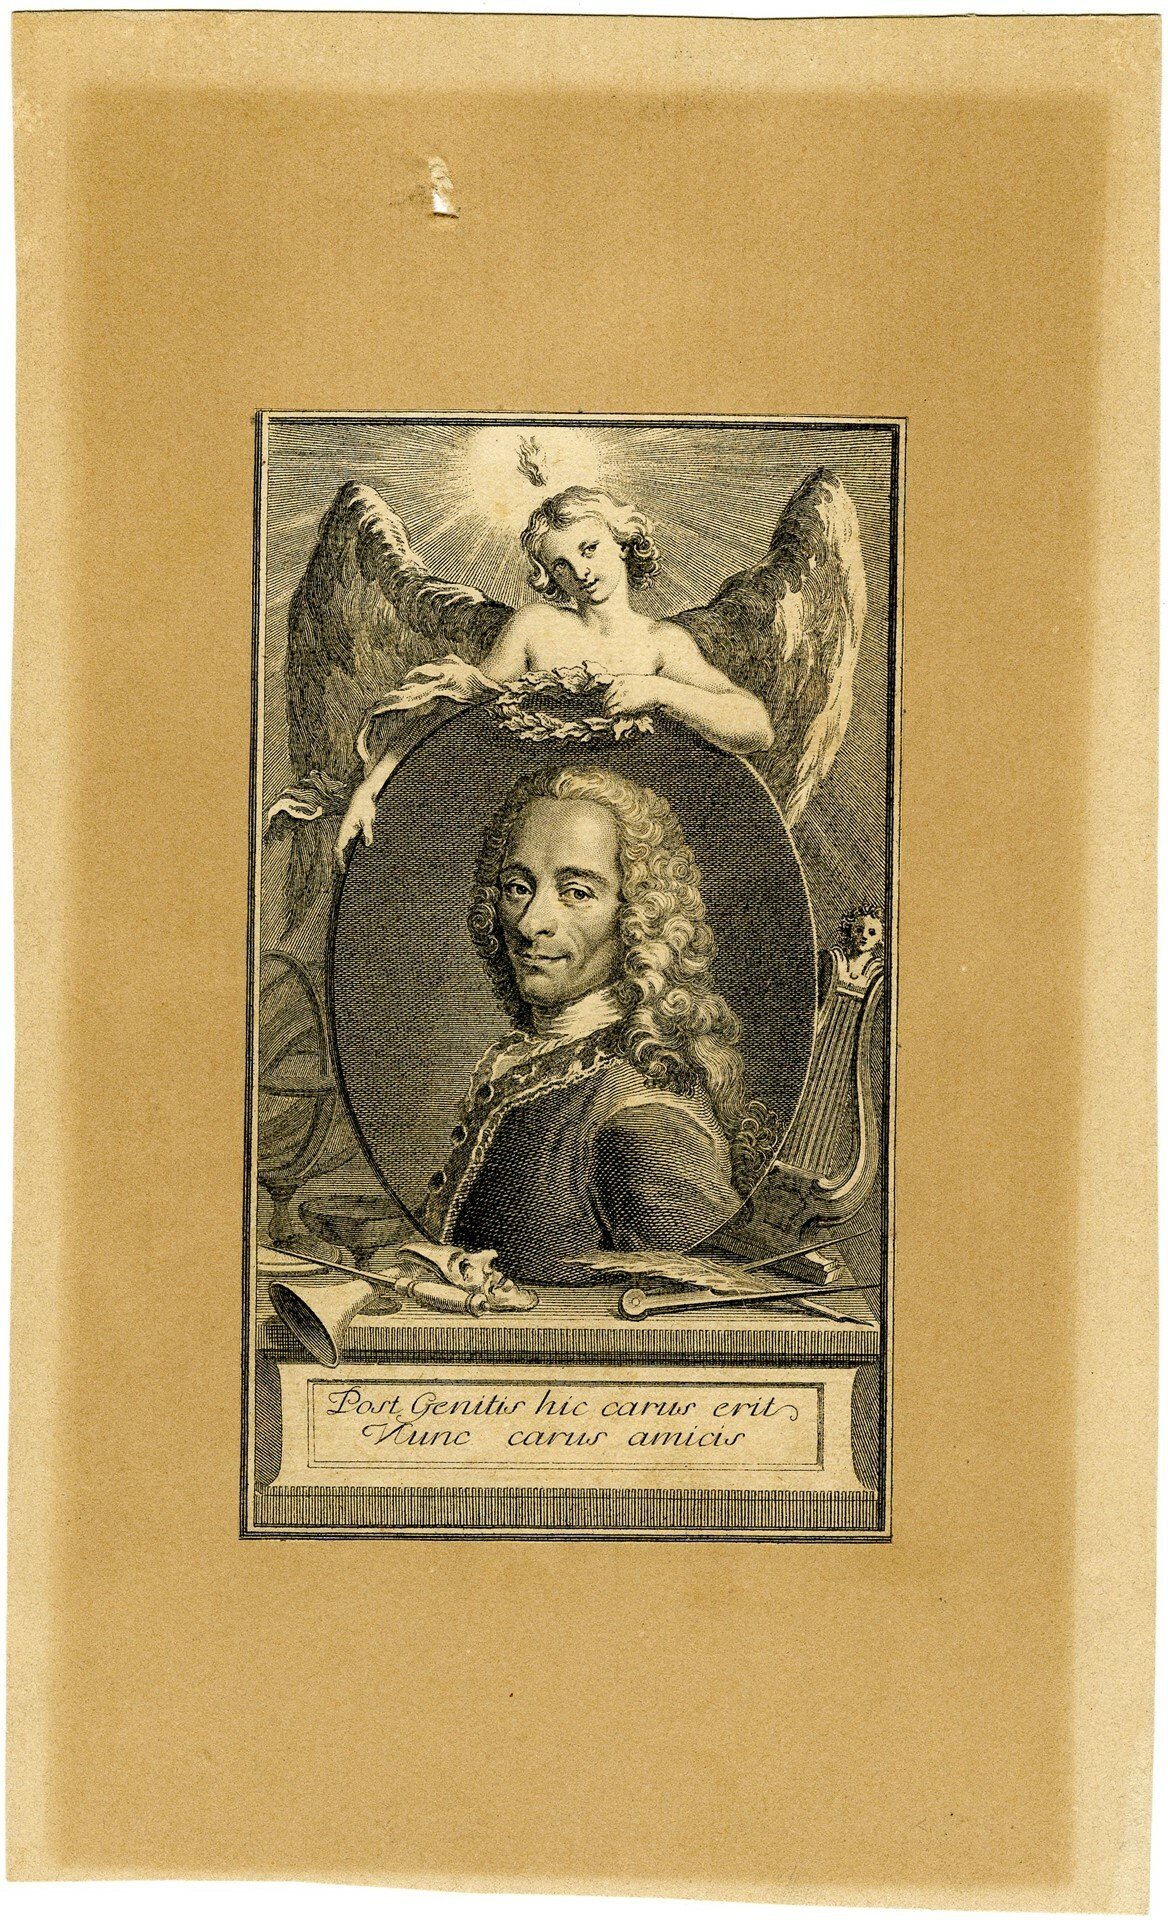 L'autore Voltaire